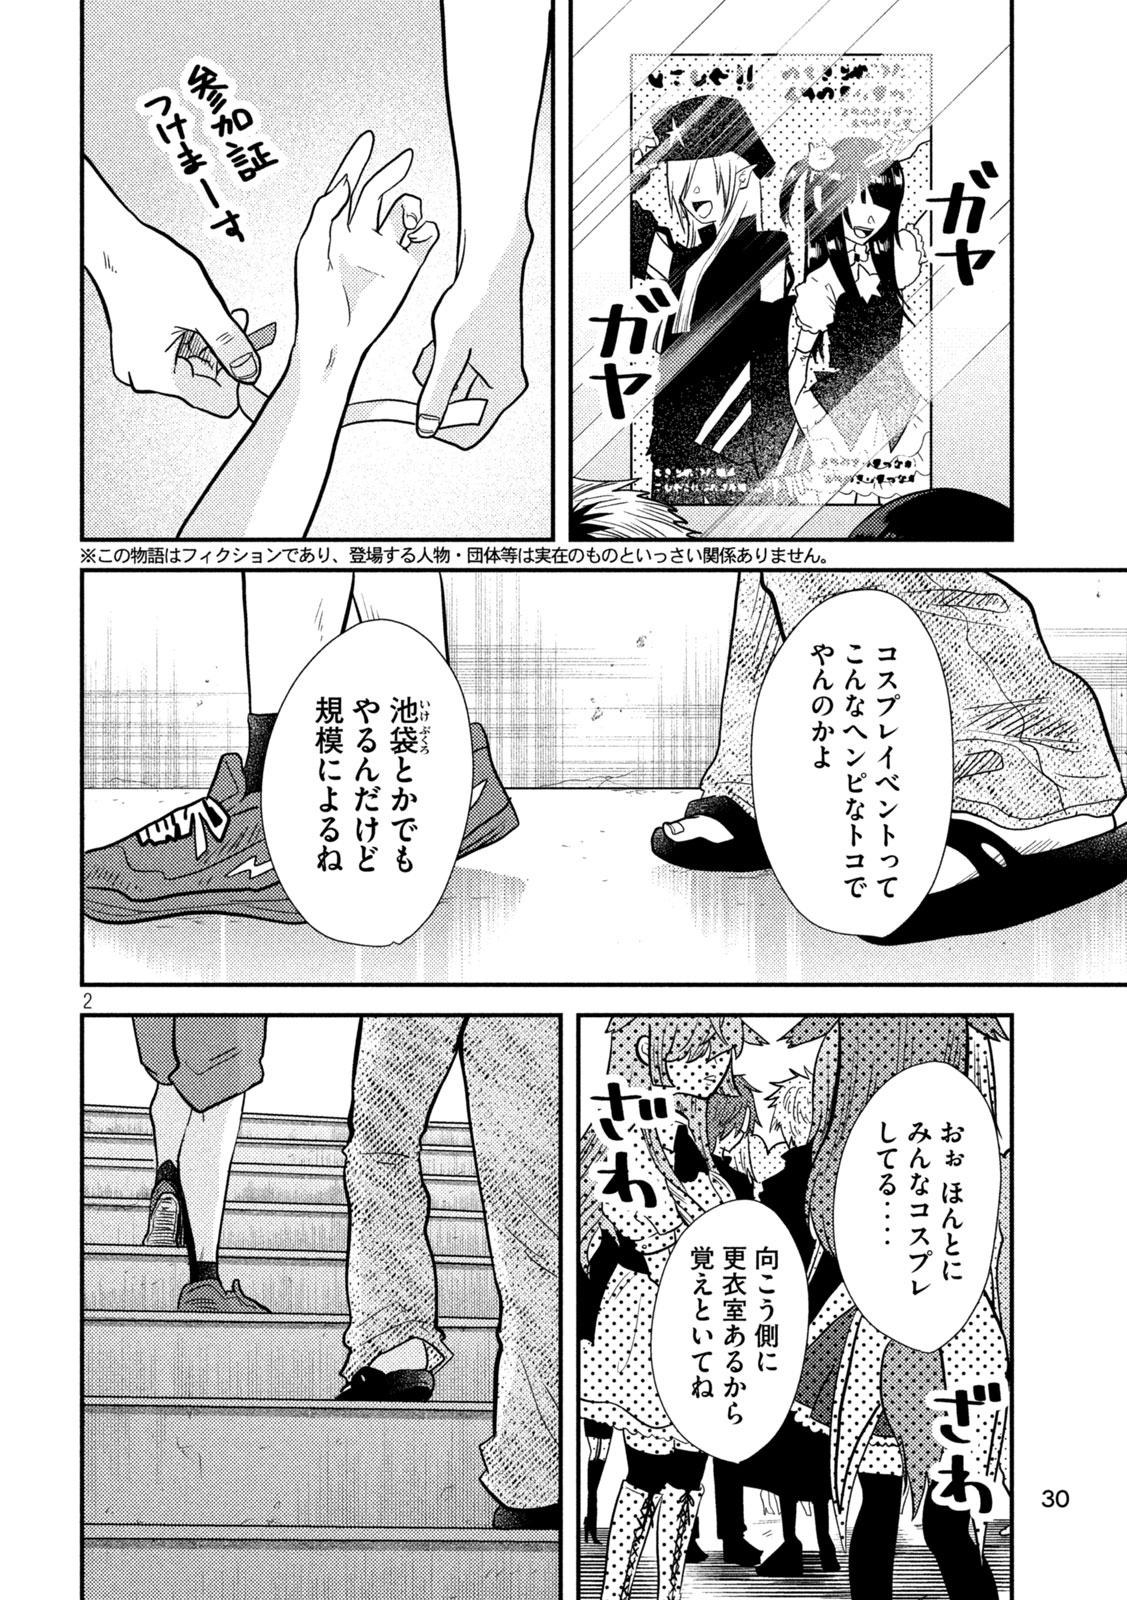 Heisei Haizanhei Sumire-chan - Chapter 3 - Page 2